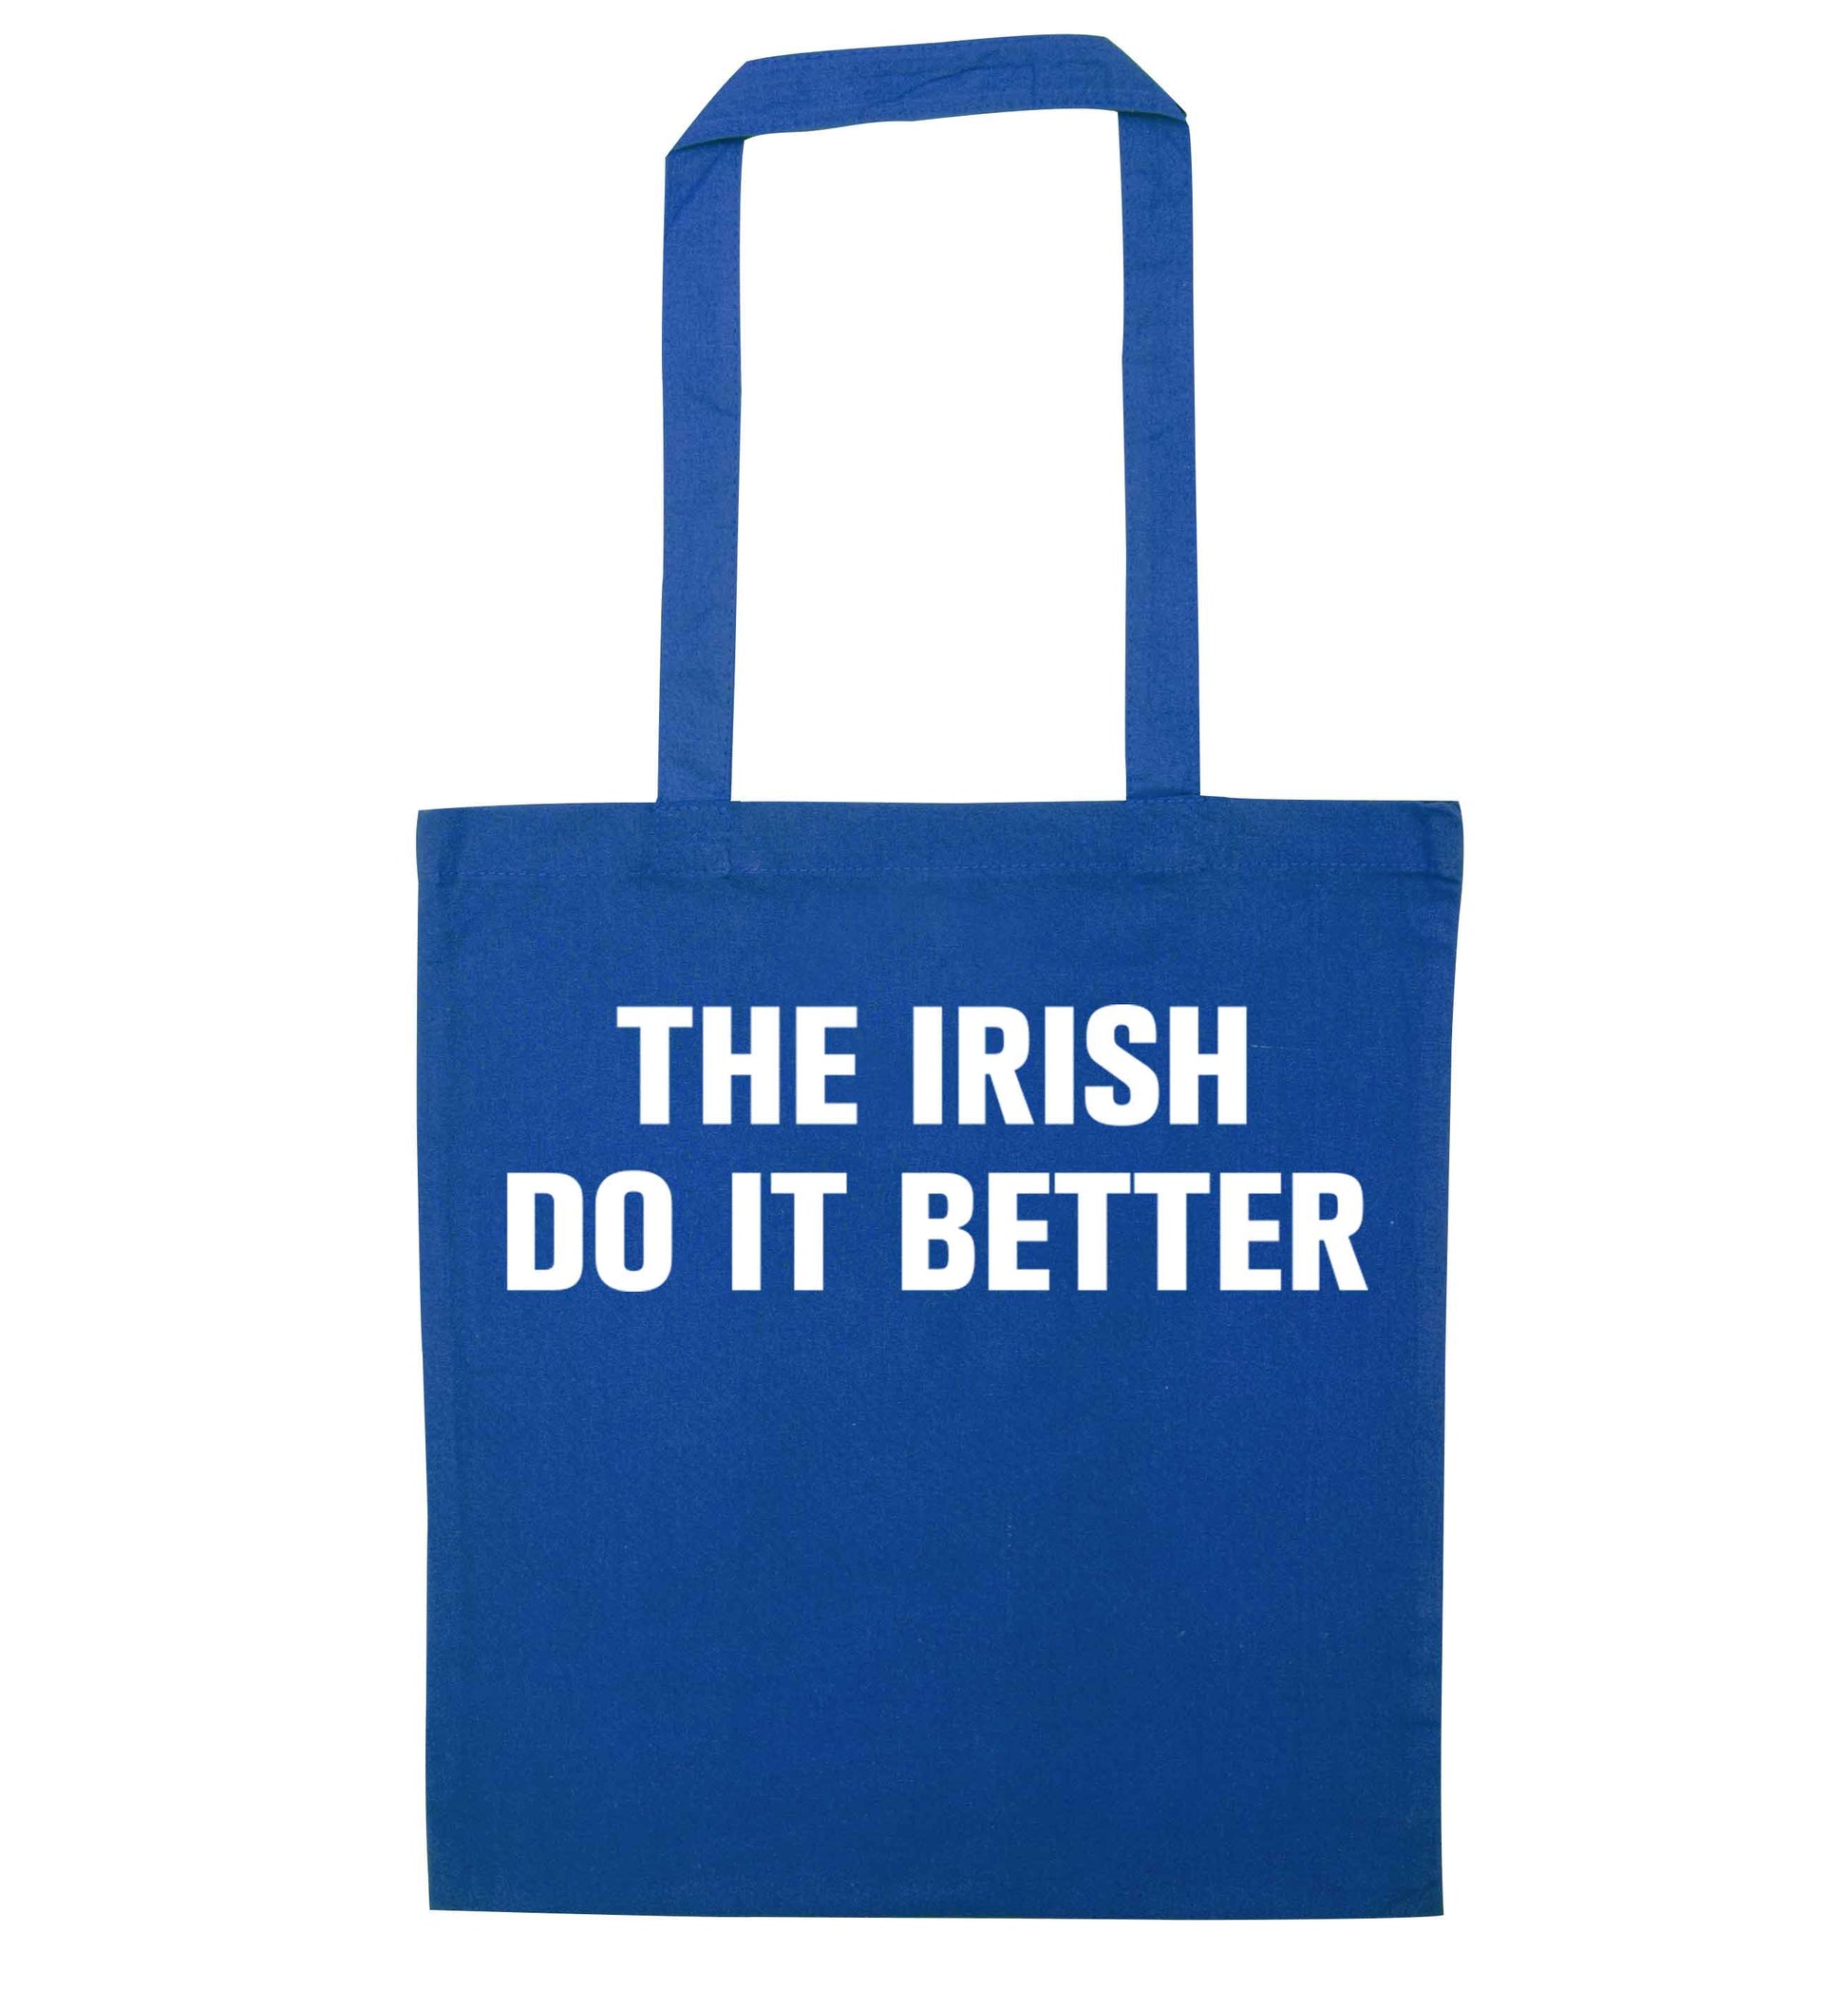 The Irish do it better blue tote bag